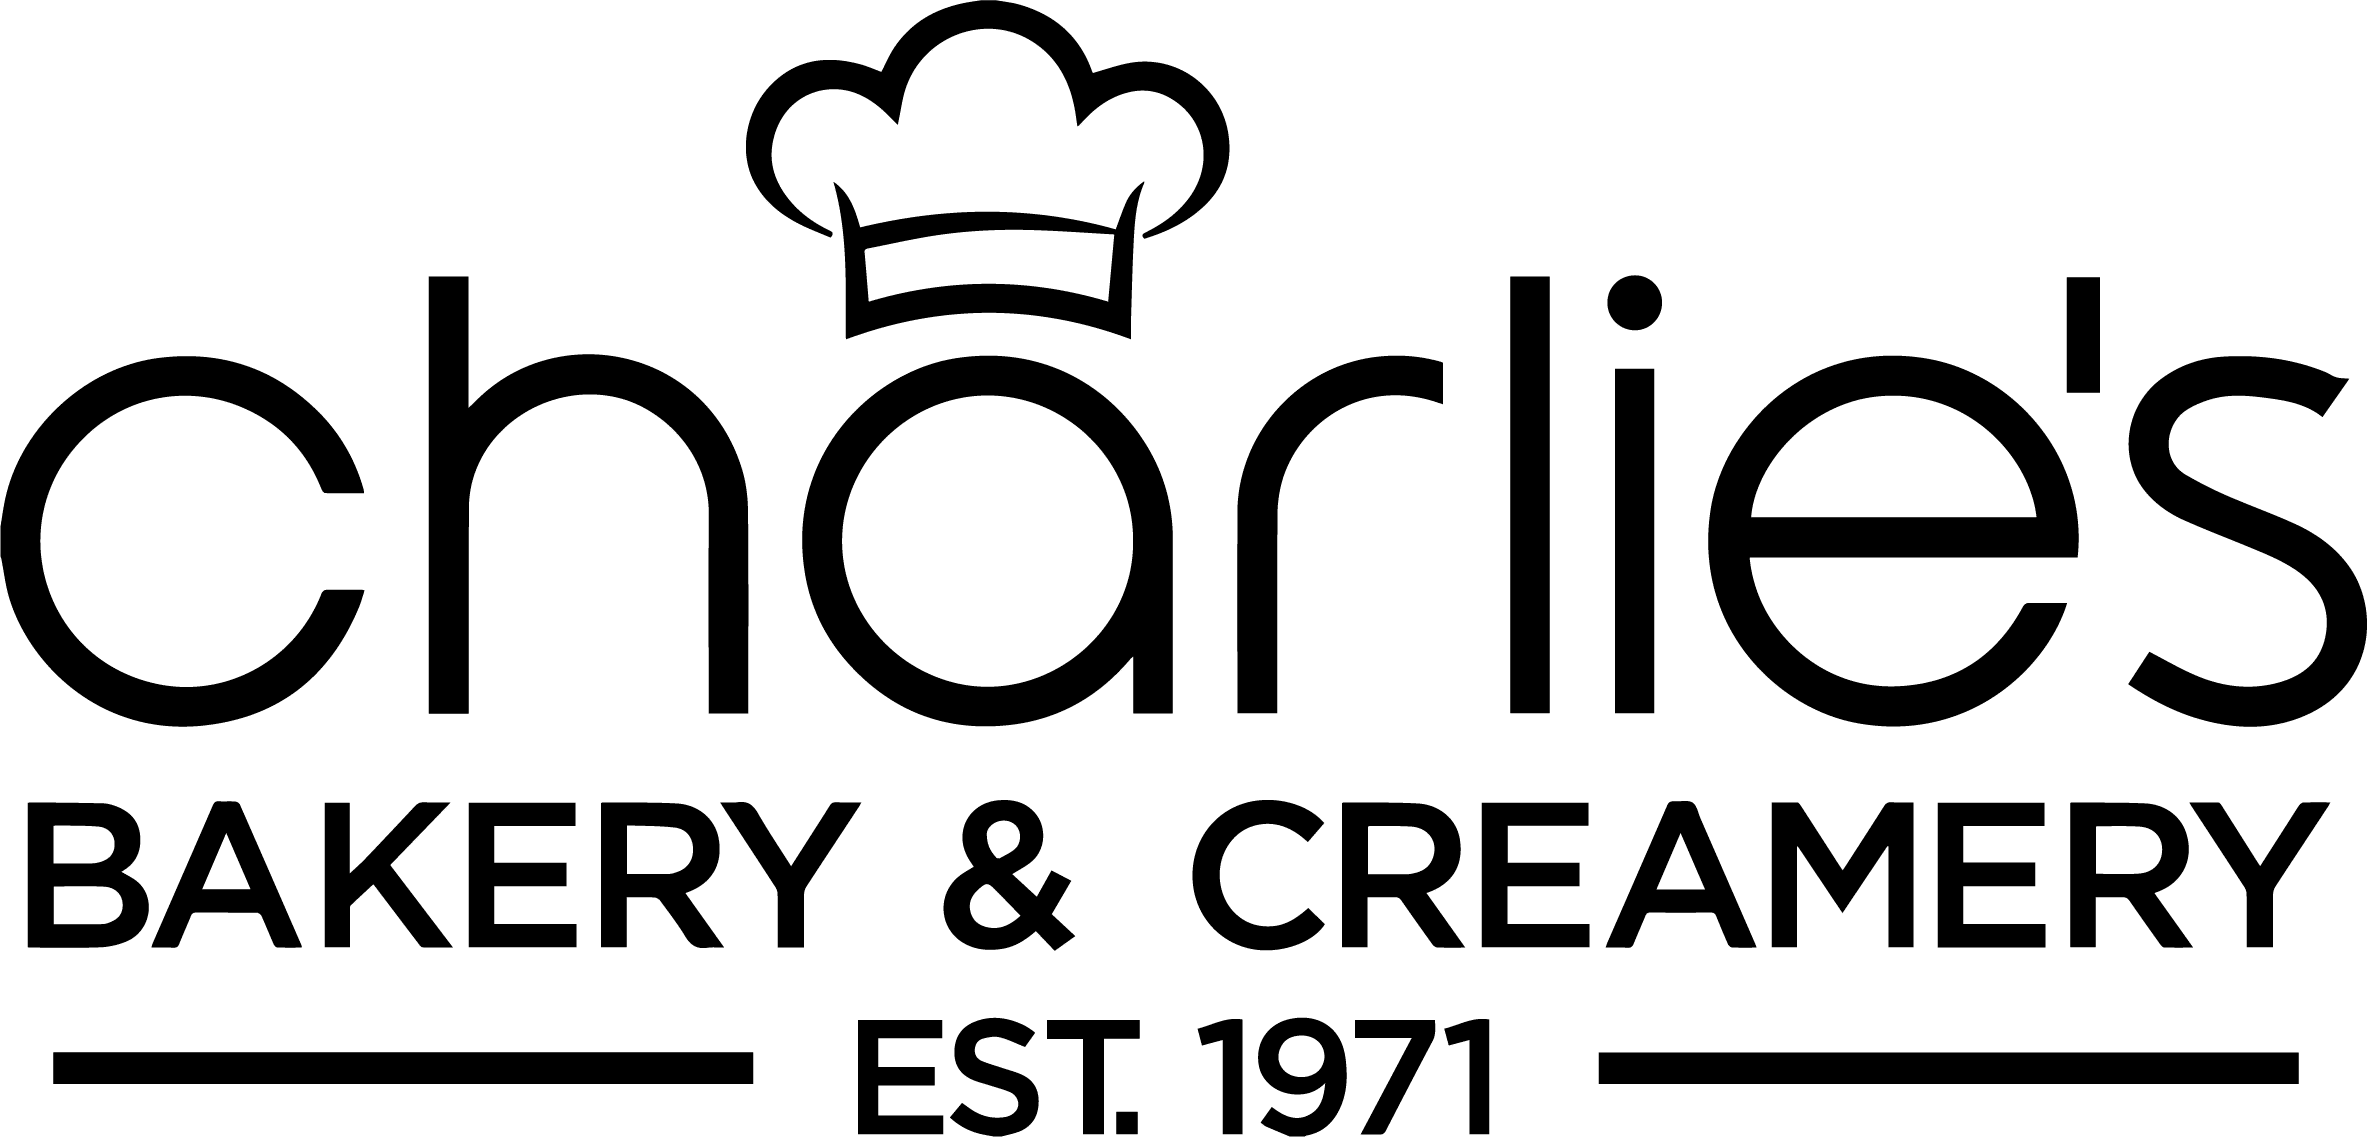 Charlie's Bakery & Creamery